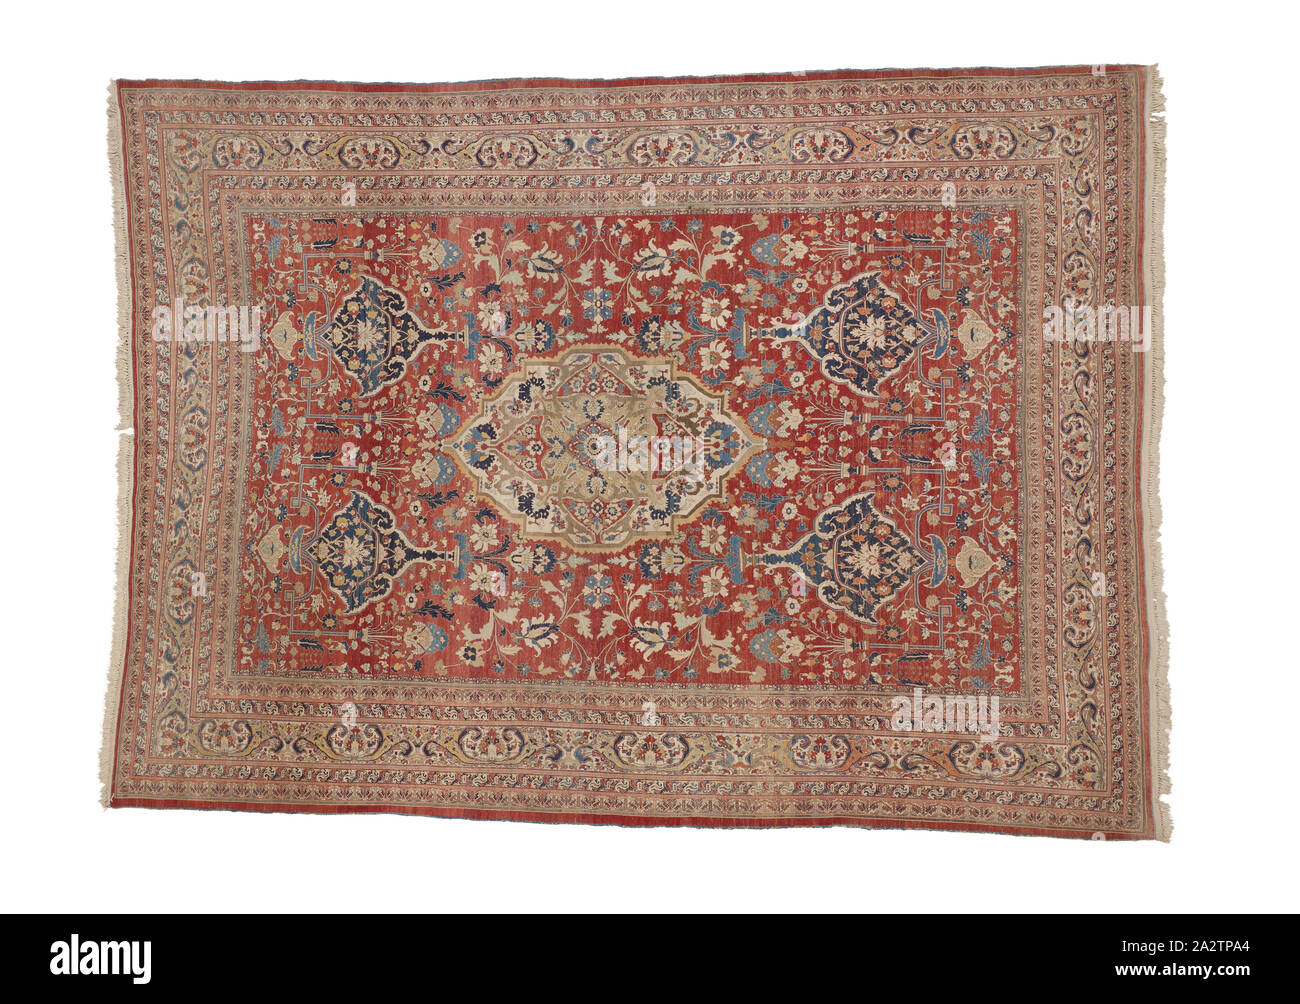 rug, 1880s-1890s, silk warp, silk pile 625 knots per inch, 120-3/4 x 166-1/2 in., Textile and Fashion Arts Stock Photo